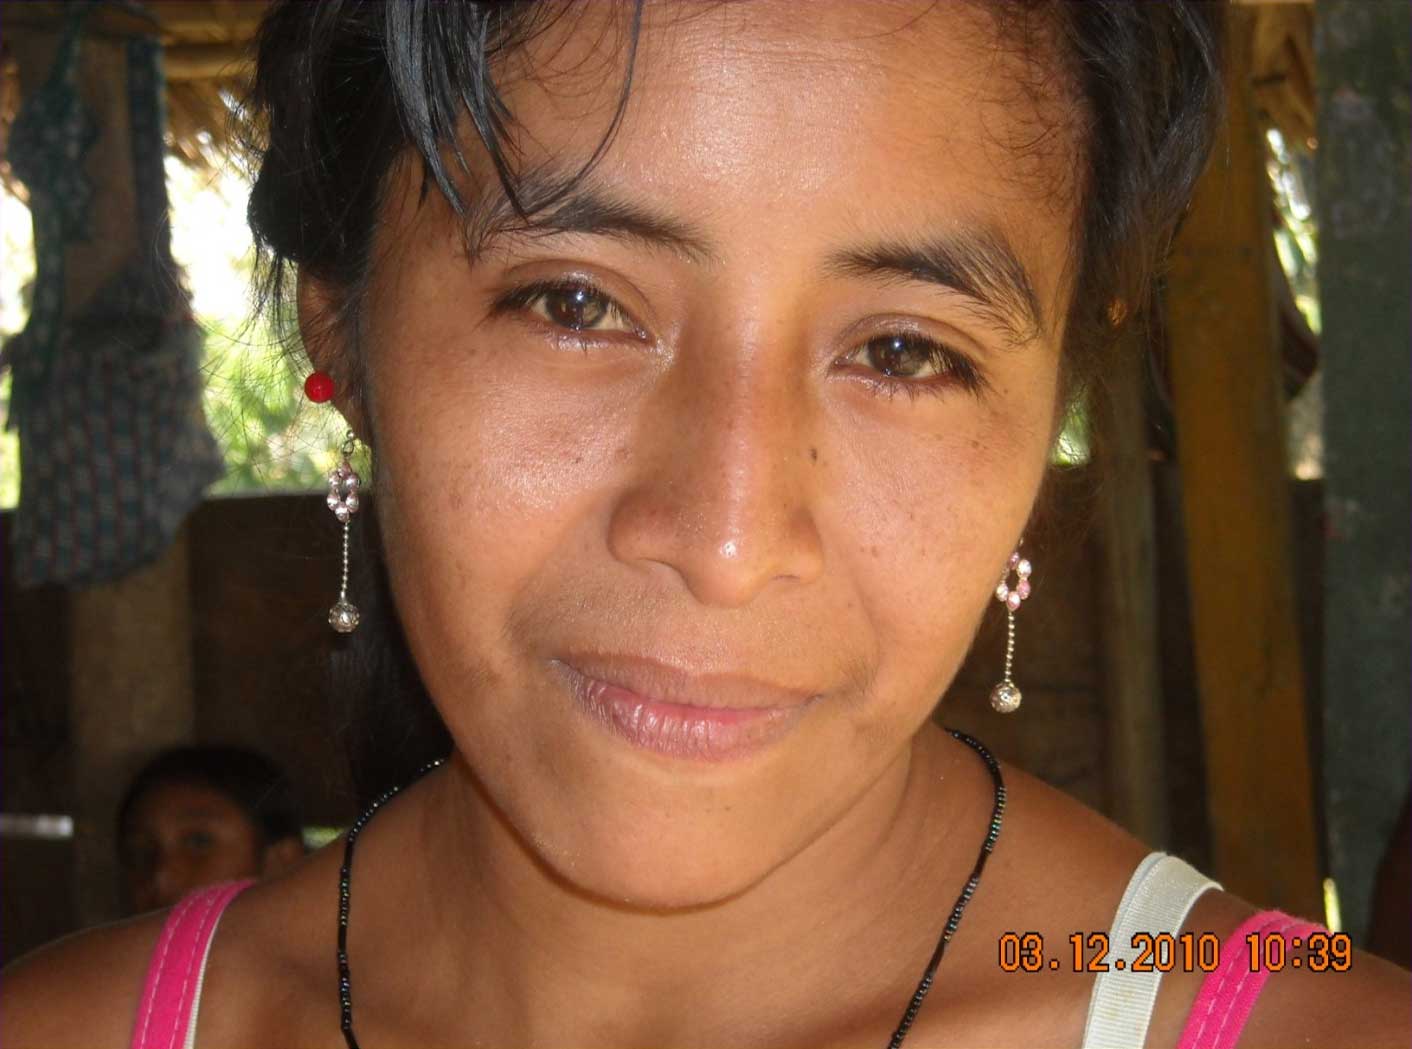 A Guatemalan midwife